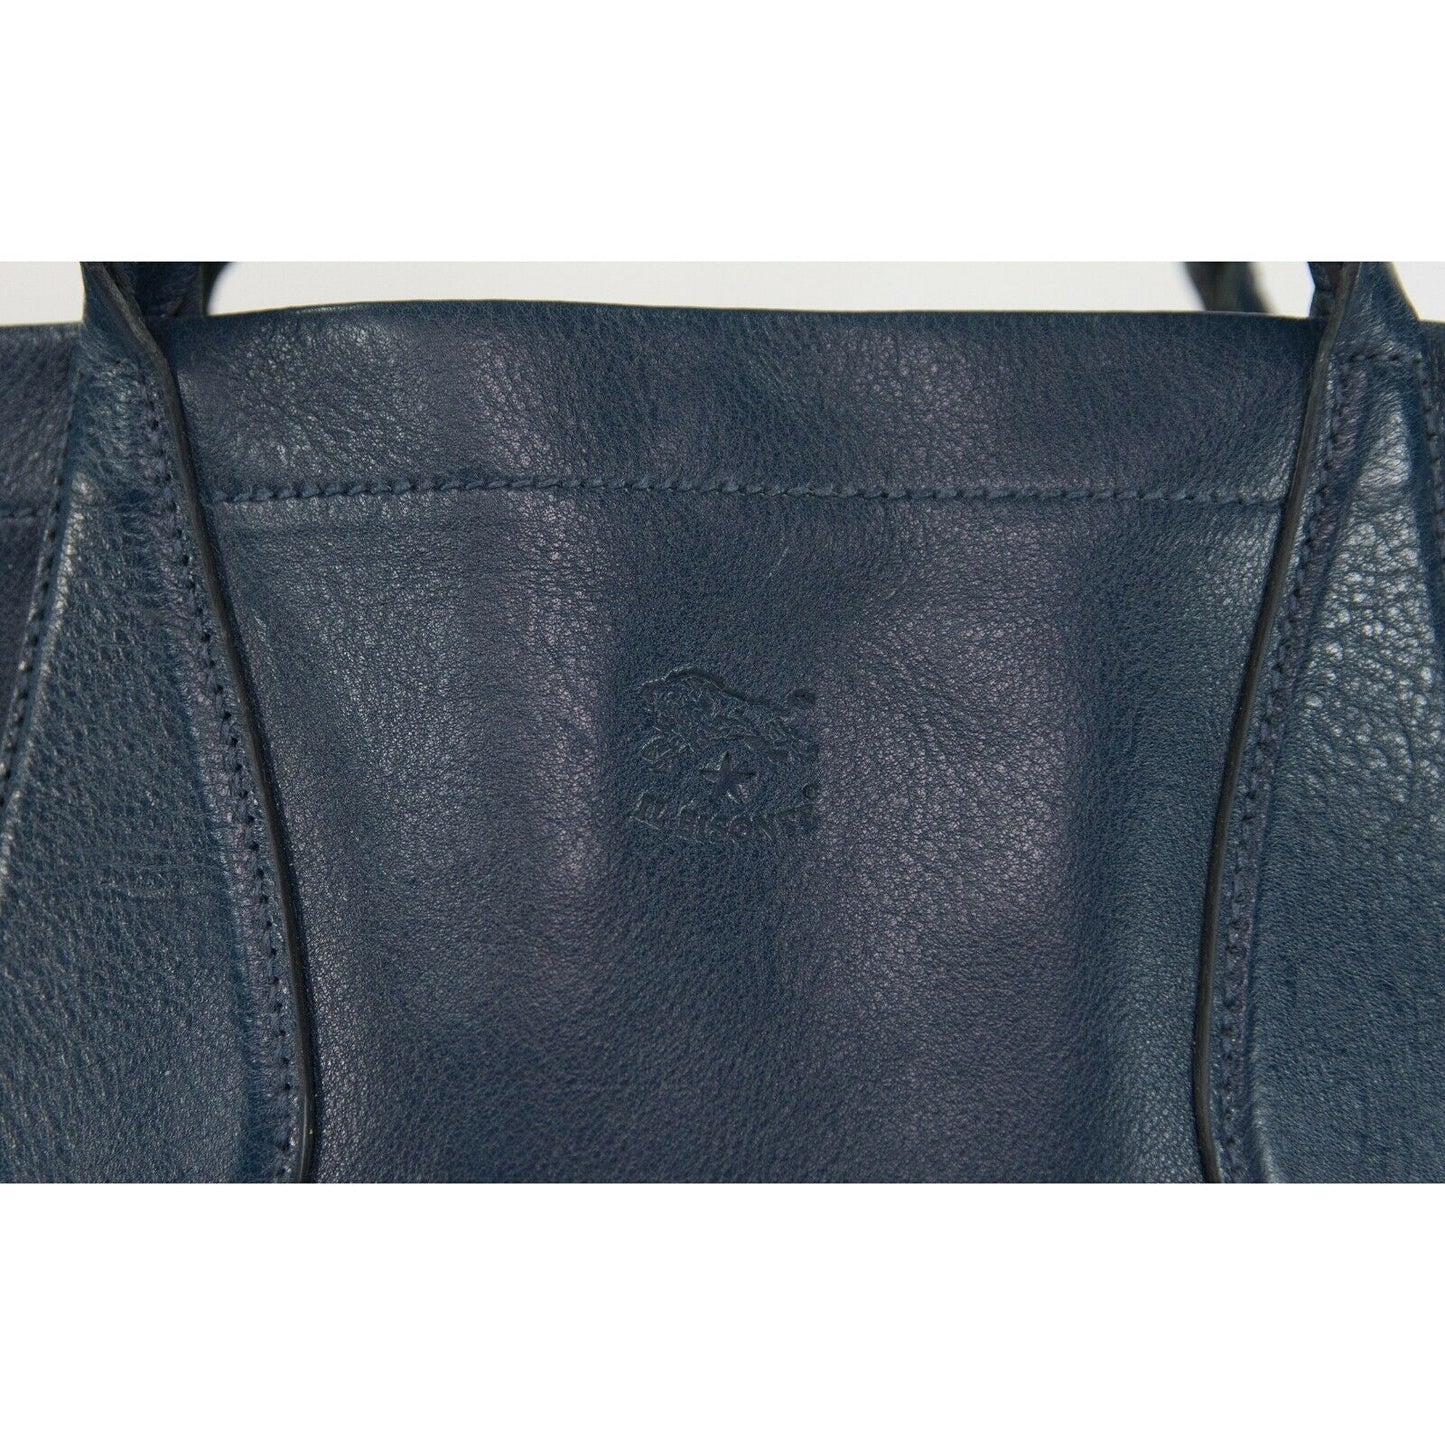 Il Bisonti Navy Blue Italian Leather Satchel Tote Bag EUC